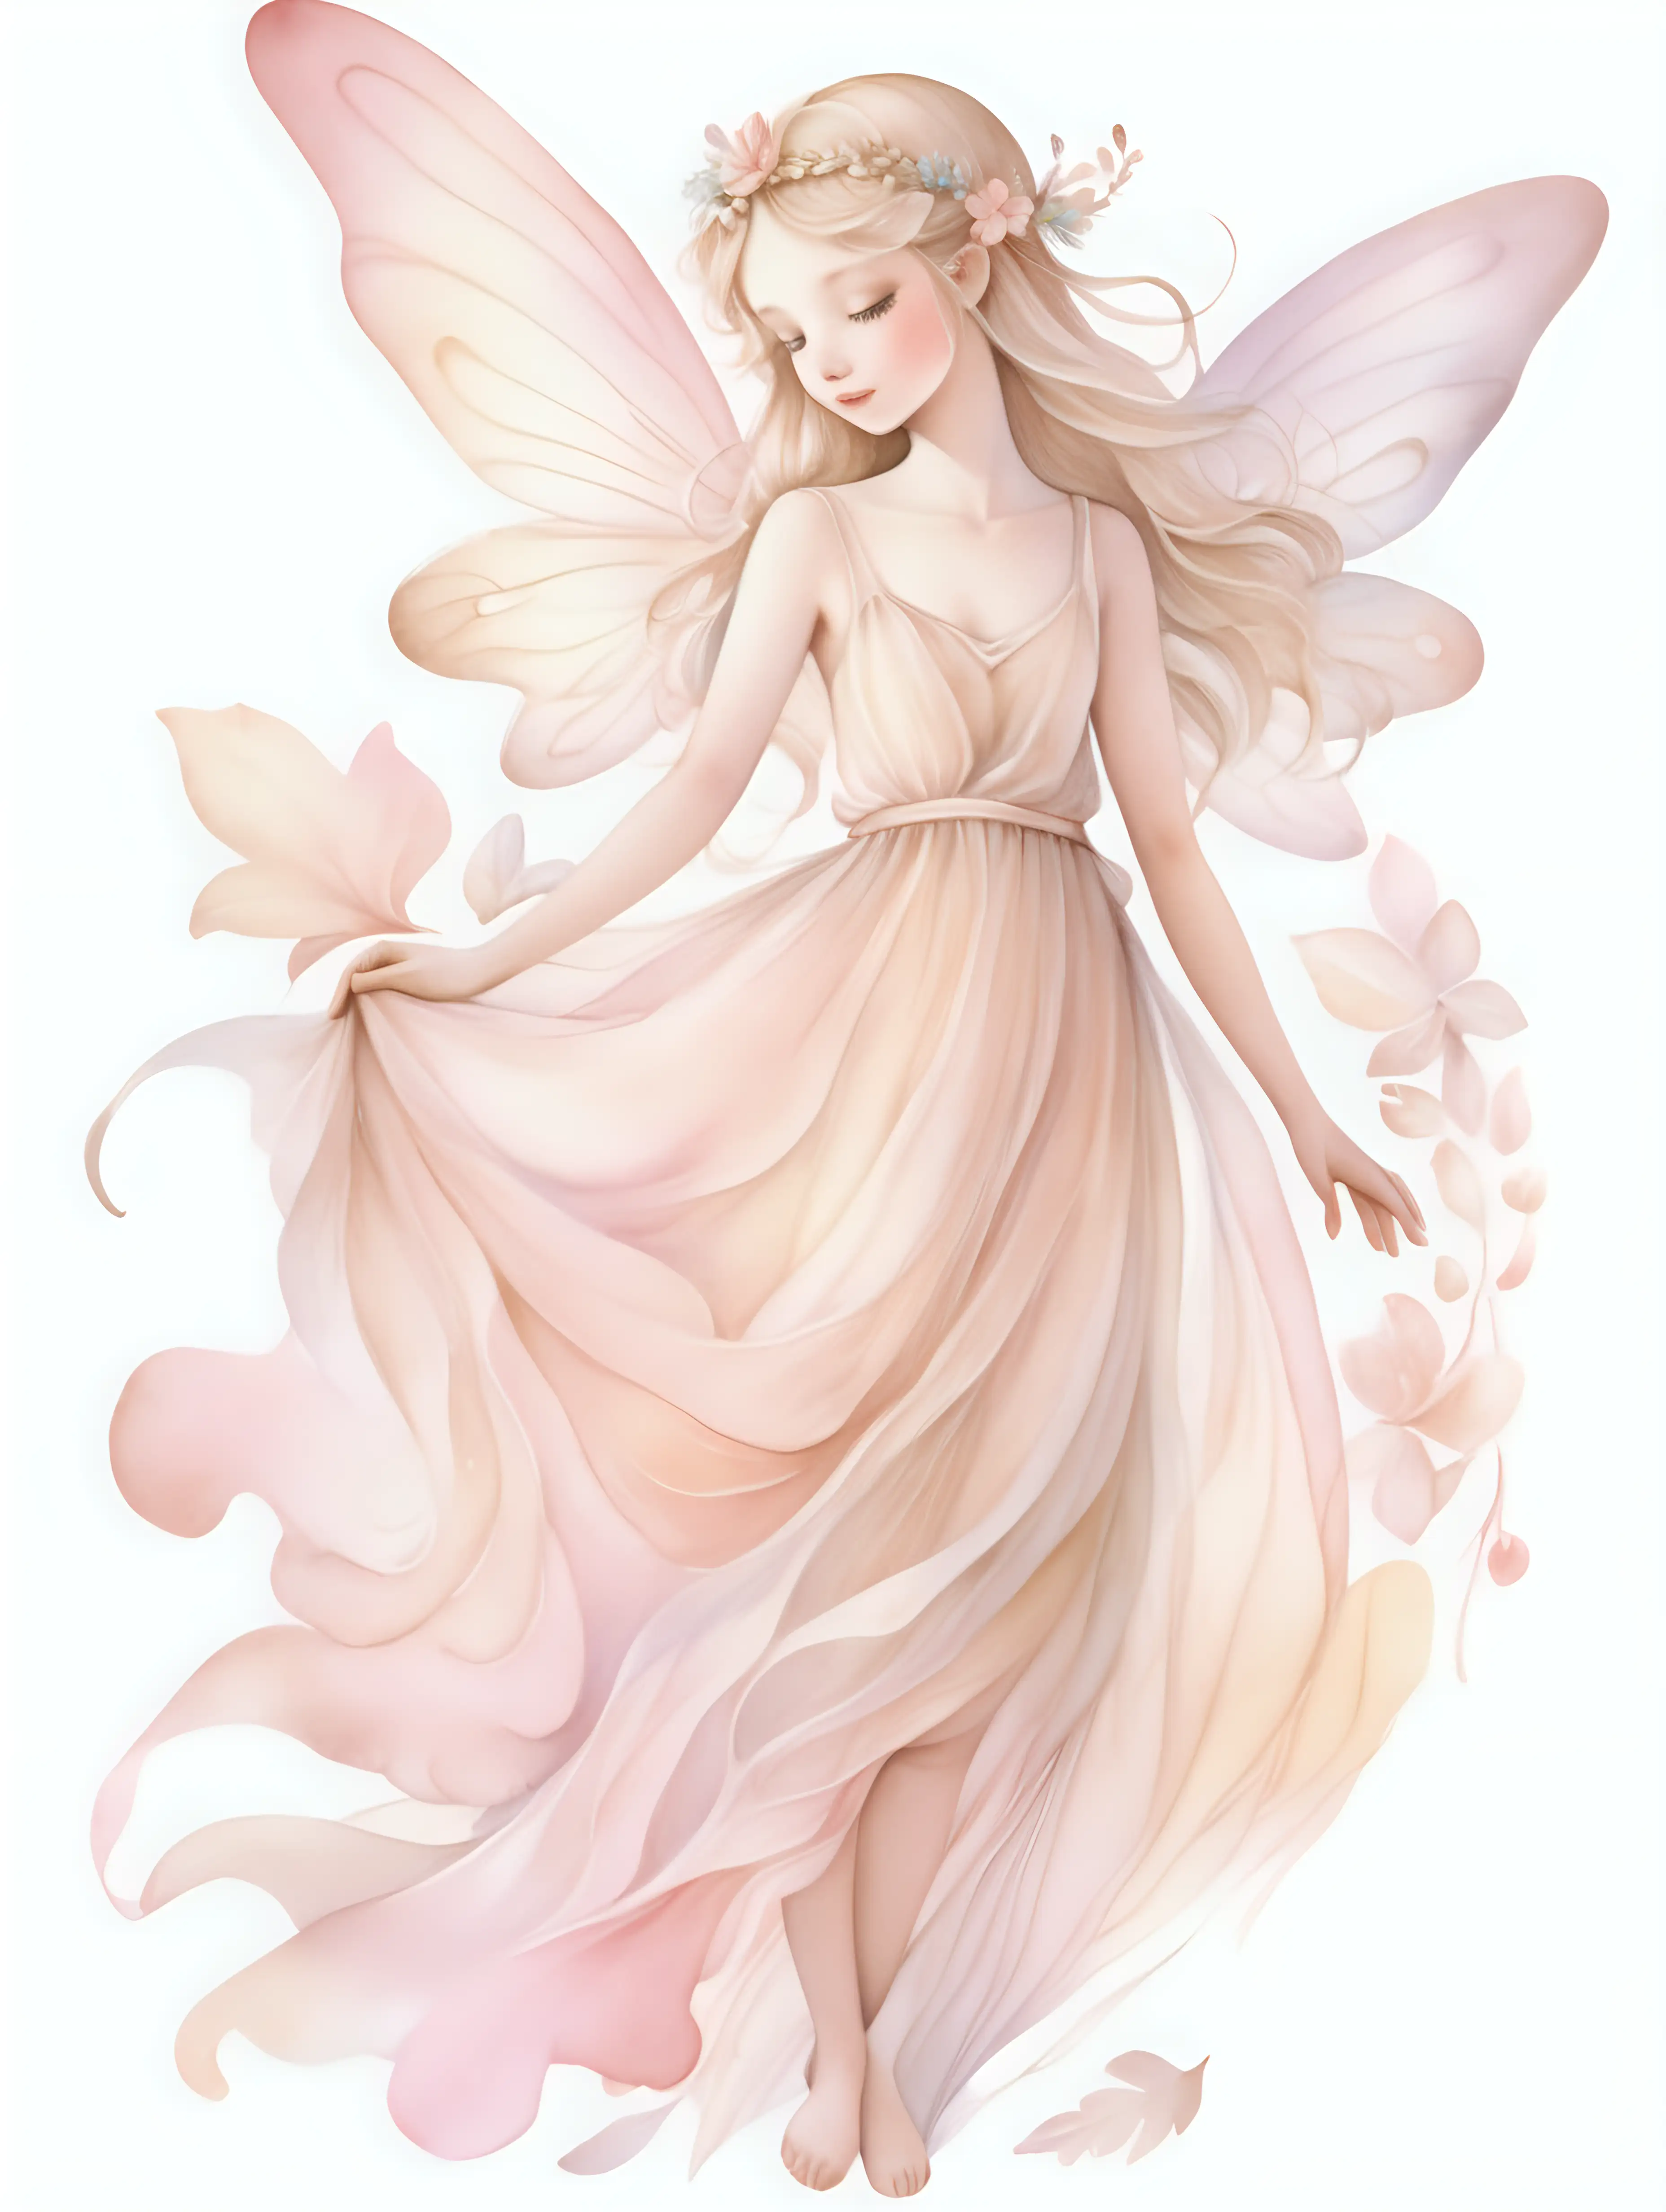 Jaya_Hess: A beautiful fairy